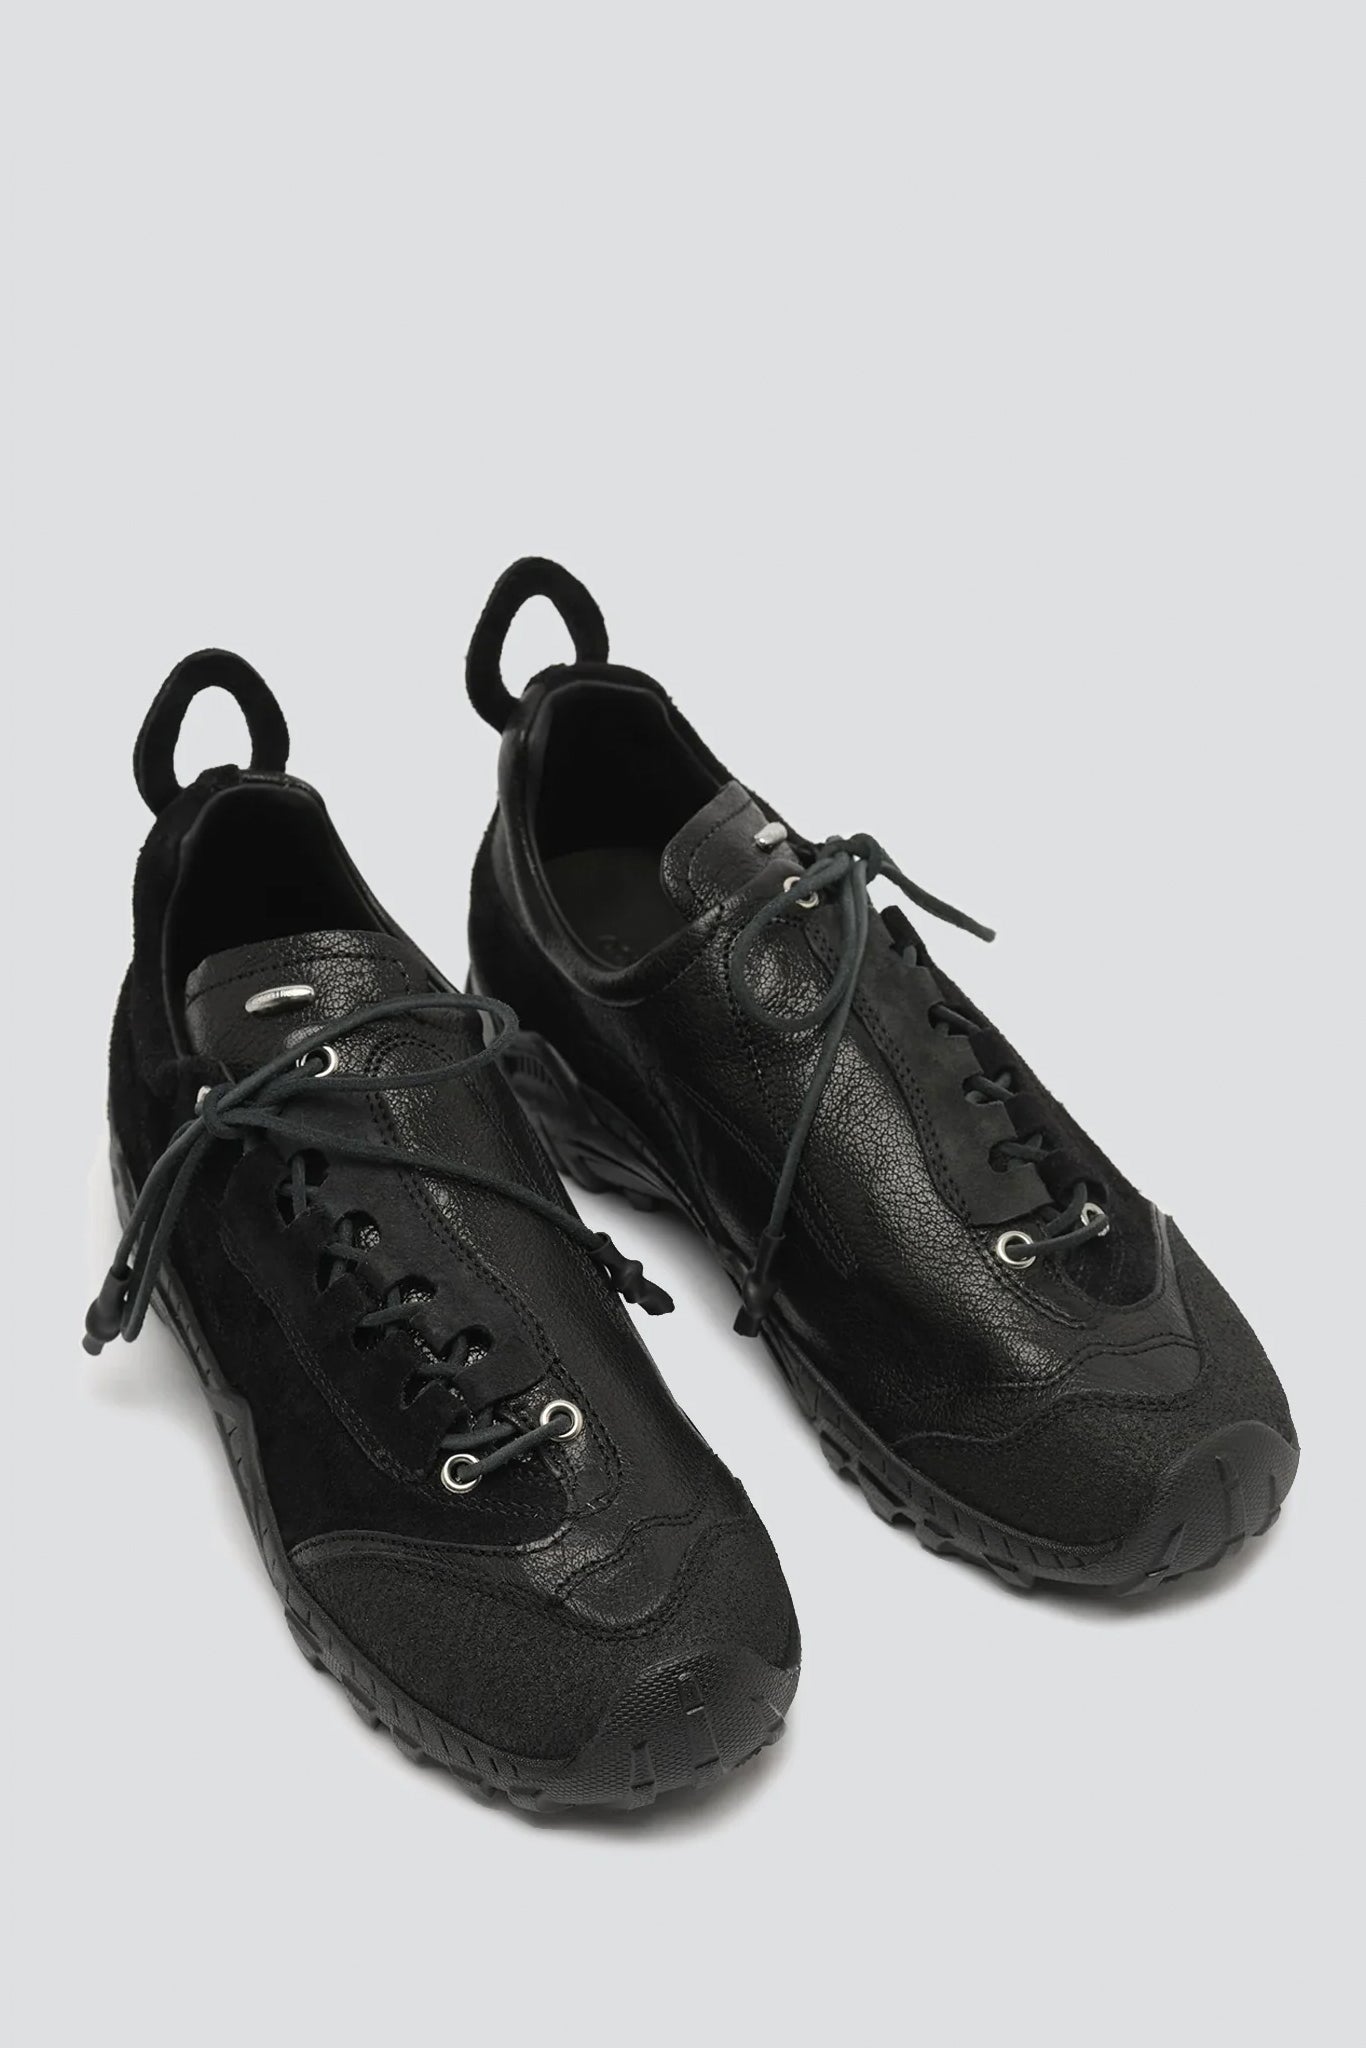 Stealth Black Leather Gabe Shoe